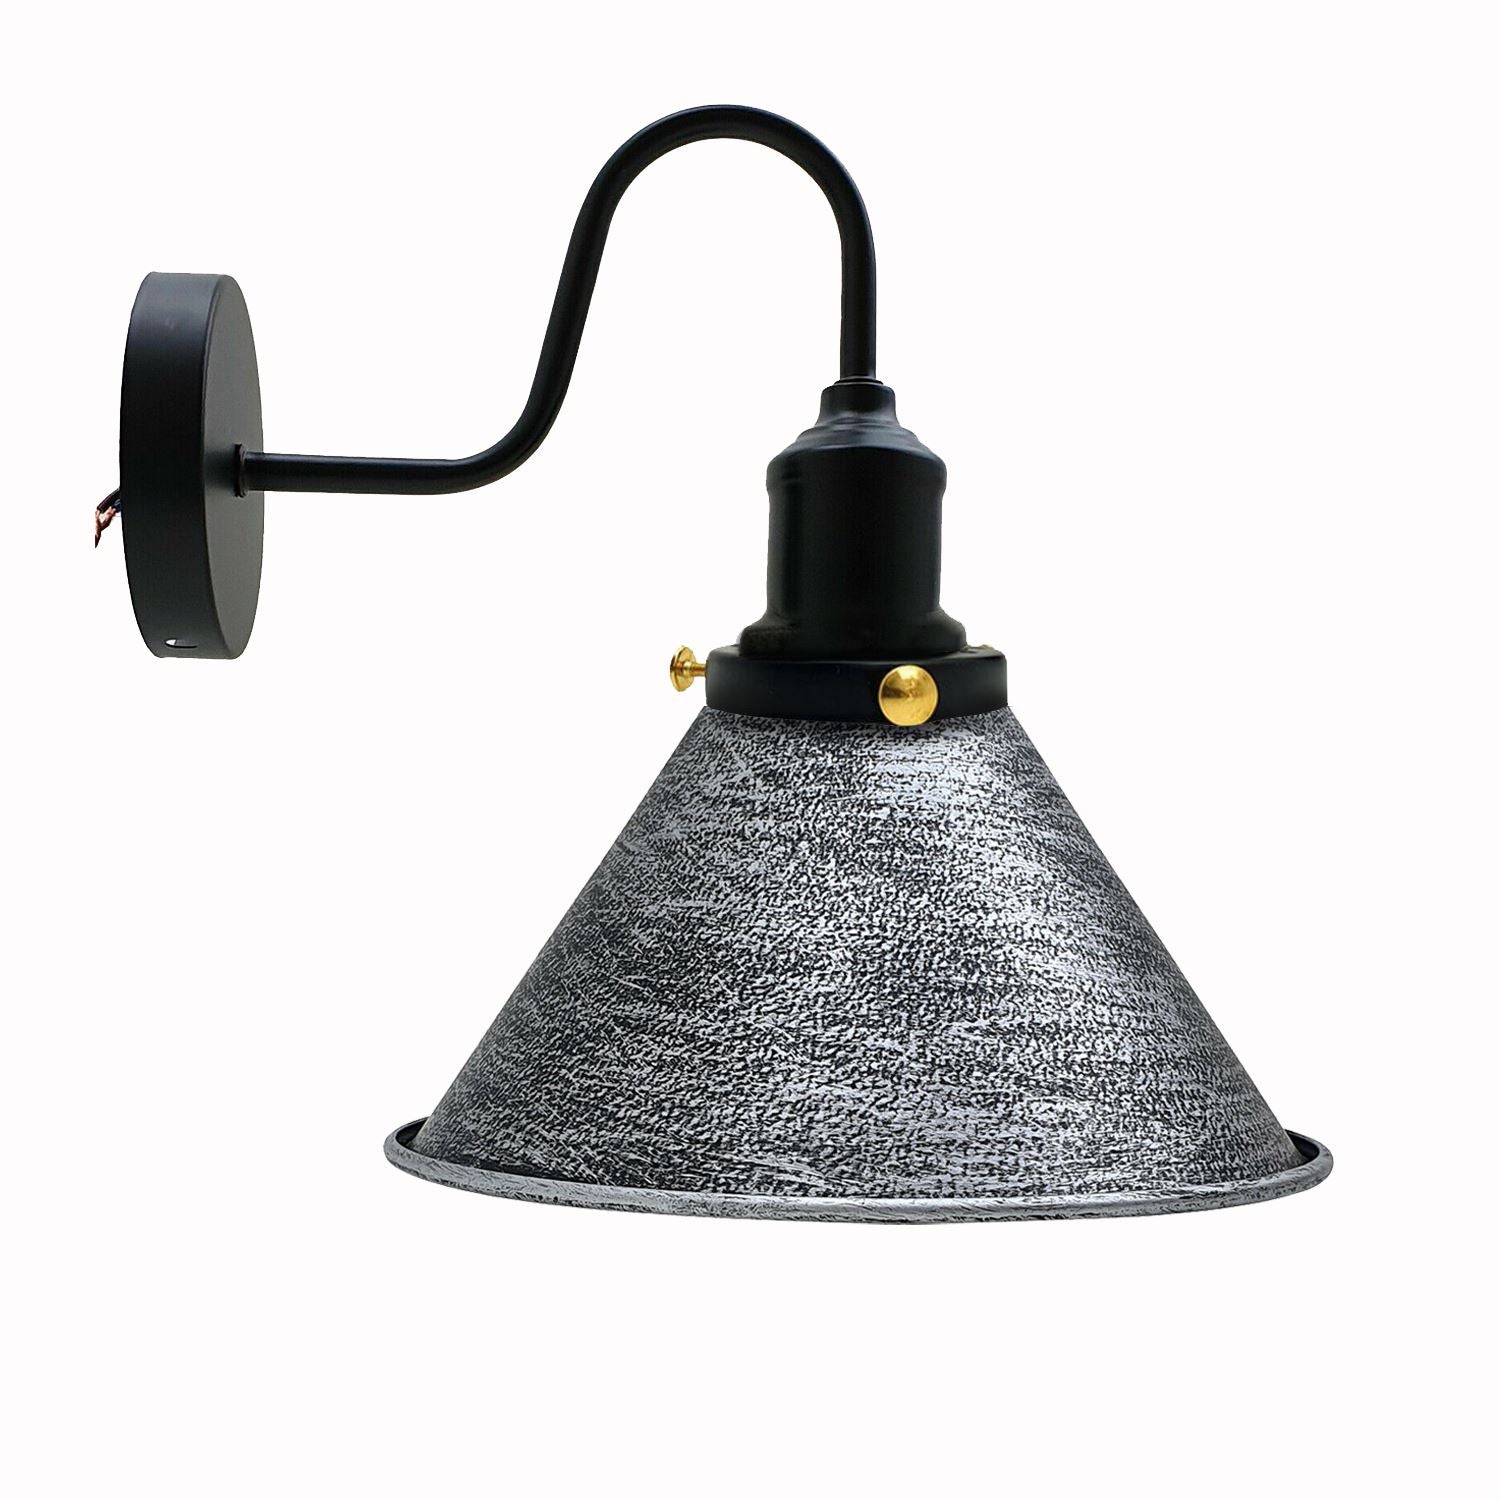 Industrial Metal Wall Light Fitting Vintage Cone shape Wall Sconce~3388 - LEDSone UK Ltd